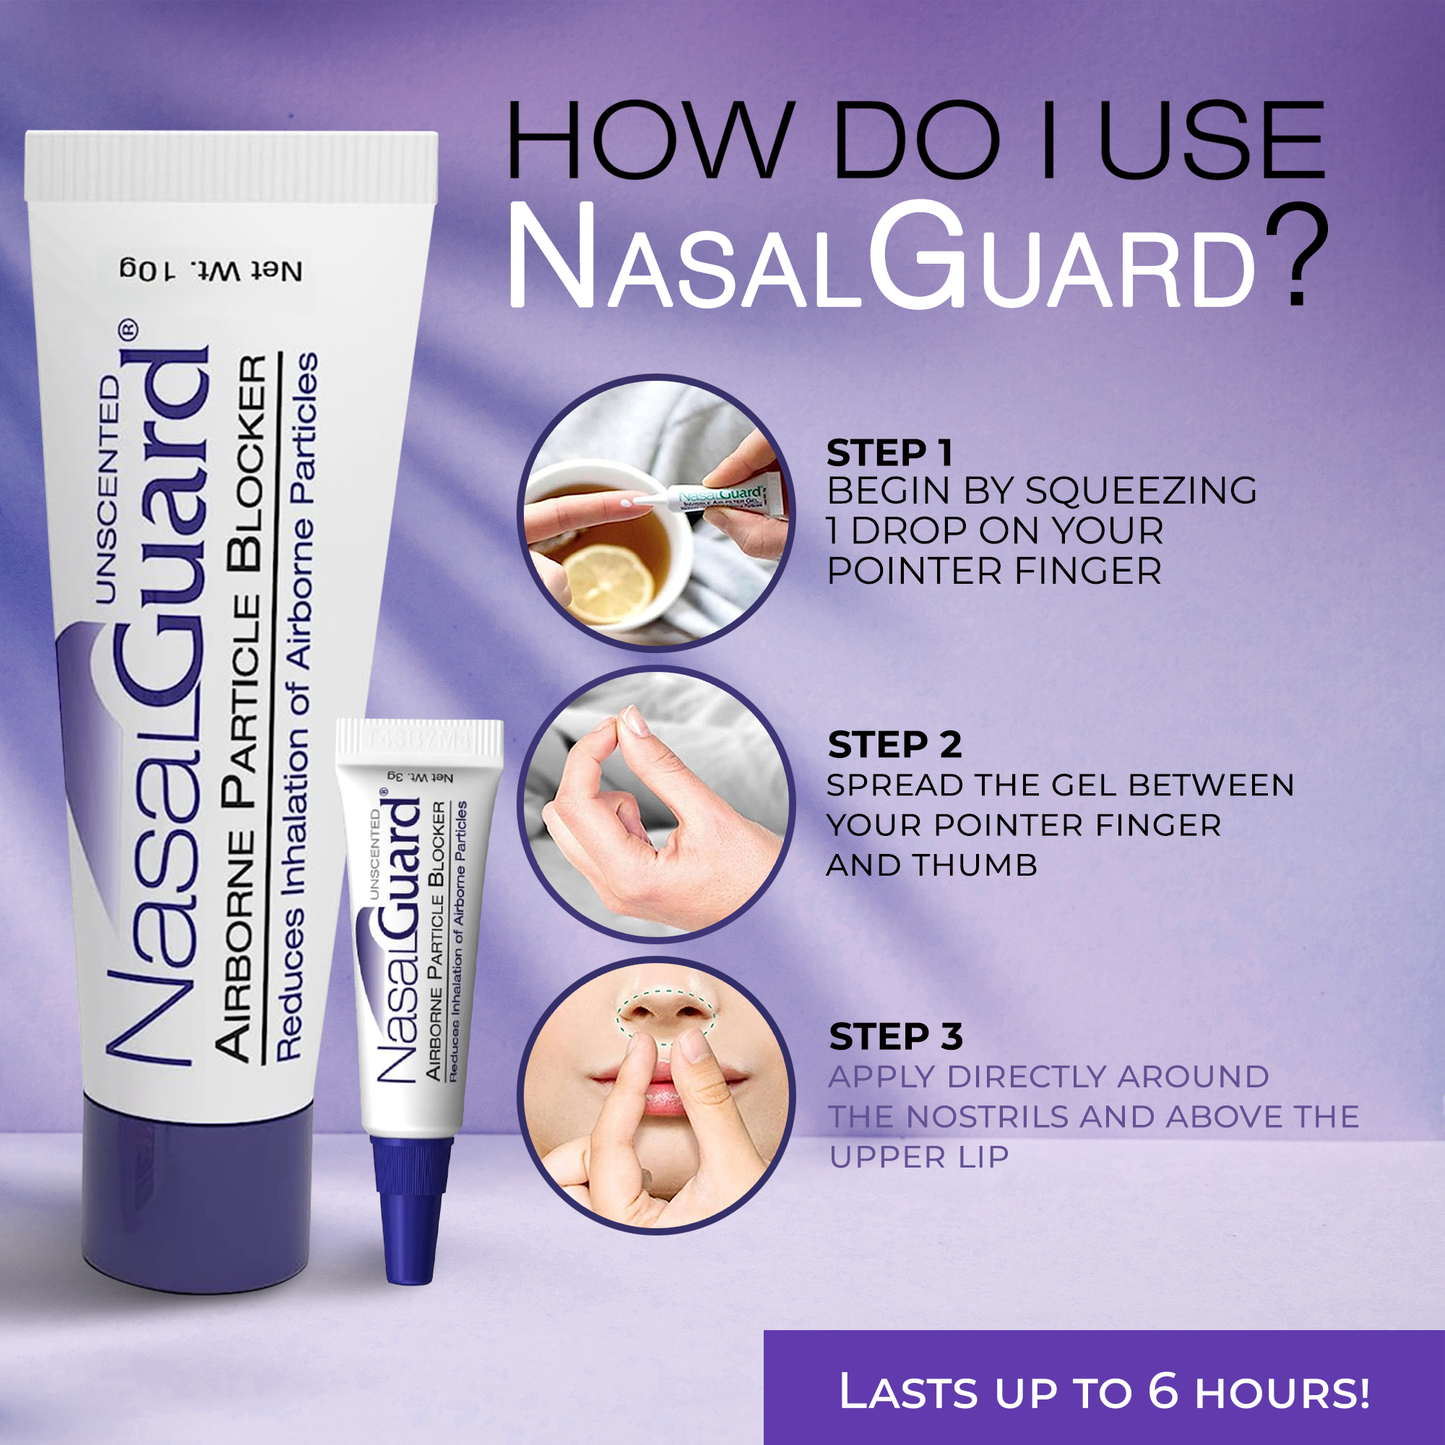 NasalGuard Allergy Relief and Allergen Blocker Nasal Gel - (Unscented, 3g, Pack of 6)